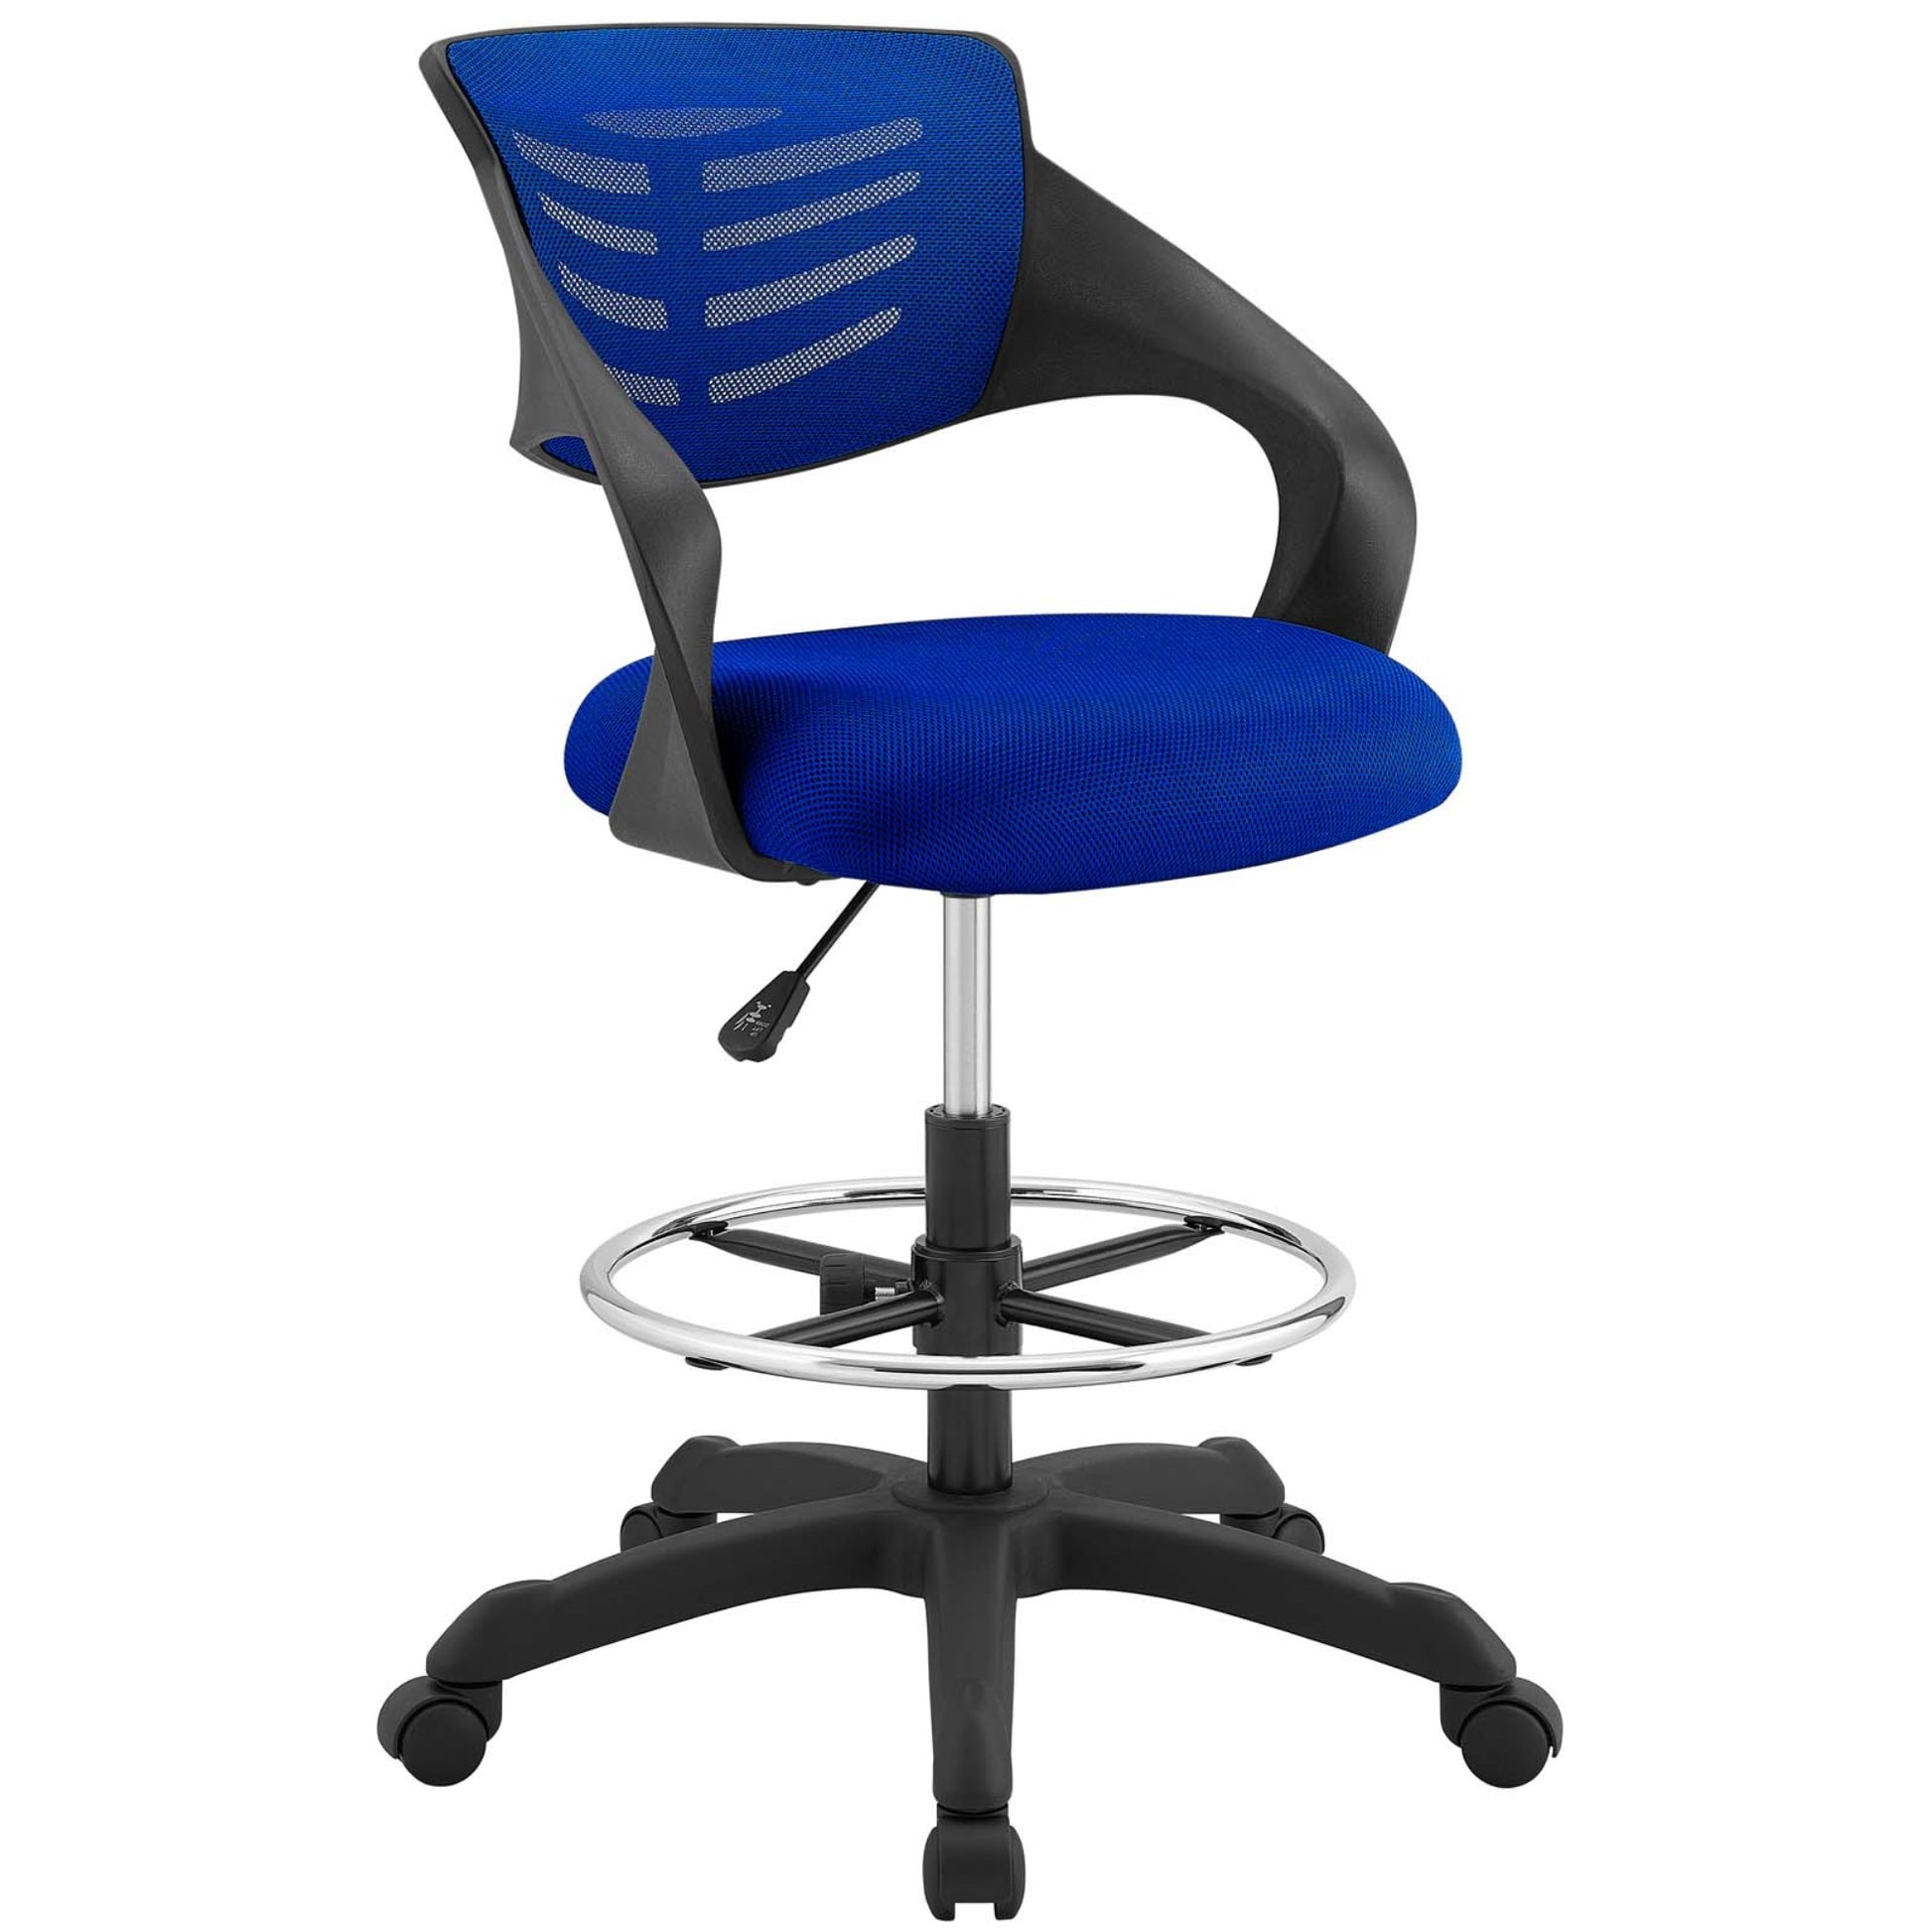 CasaFoyer Thrive Mesh Drafting Chair - Durable Nylon Frame, Breathable Mesh Back, Lumbar Support, Adjustable Foot Ring, Ergonomic Design, Blue